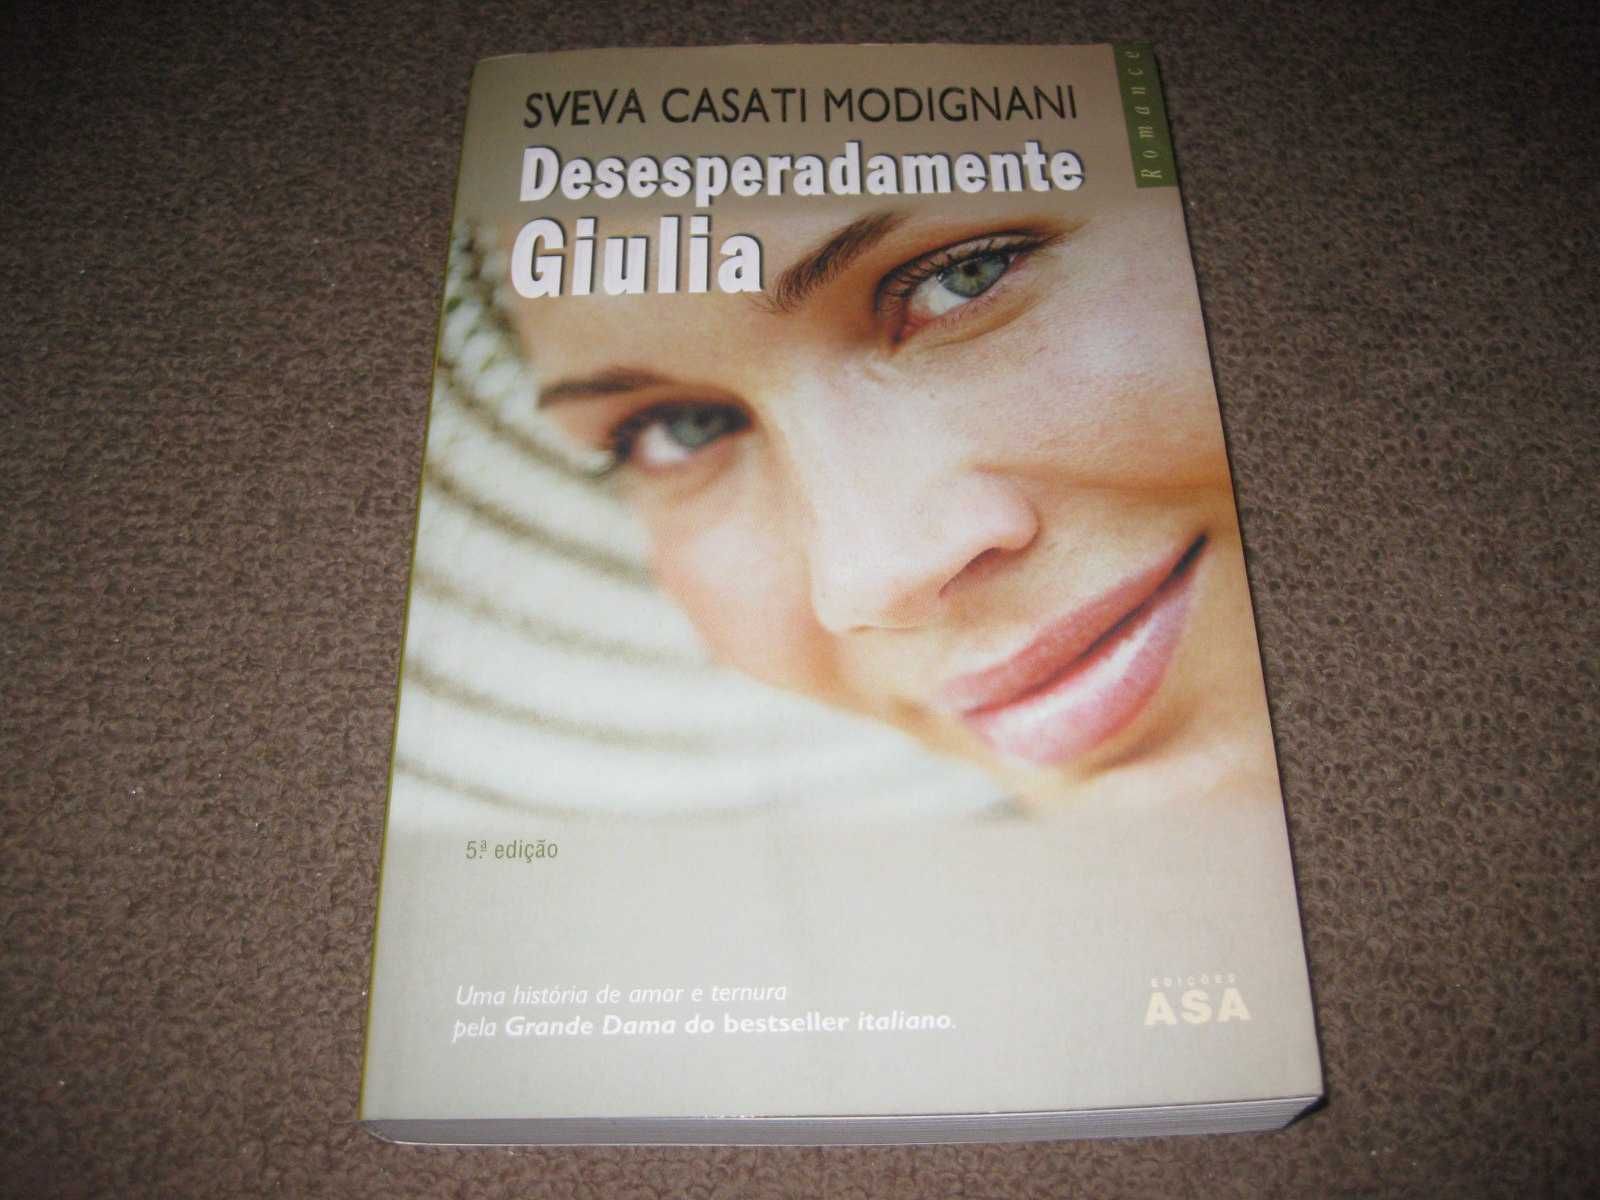 Livro "Desesperadamente Giulia" de Sveva Casati Modignani